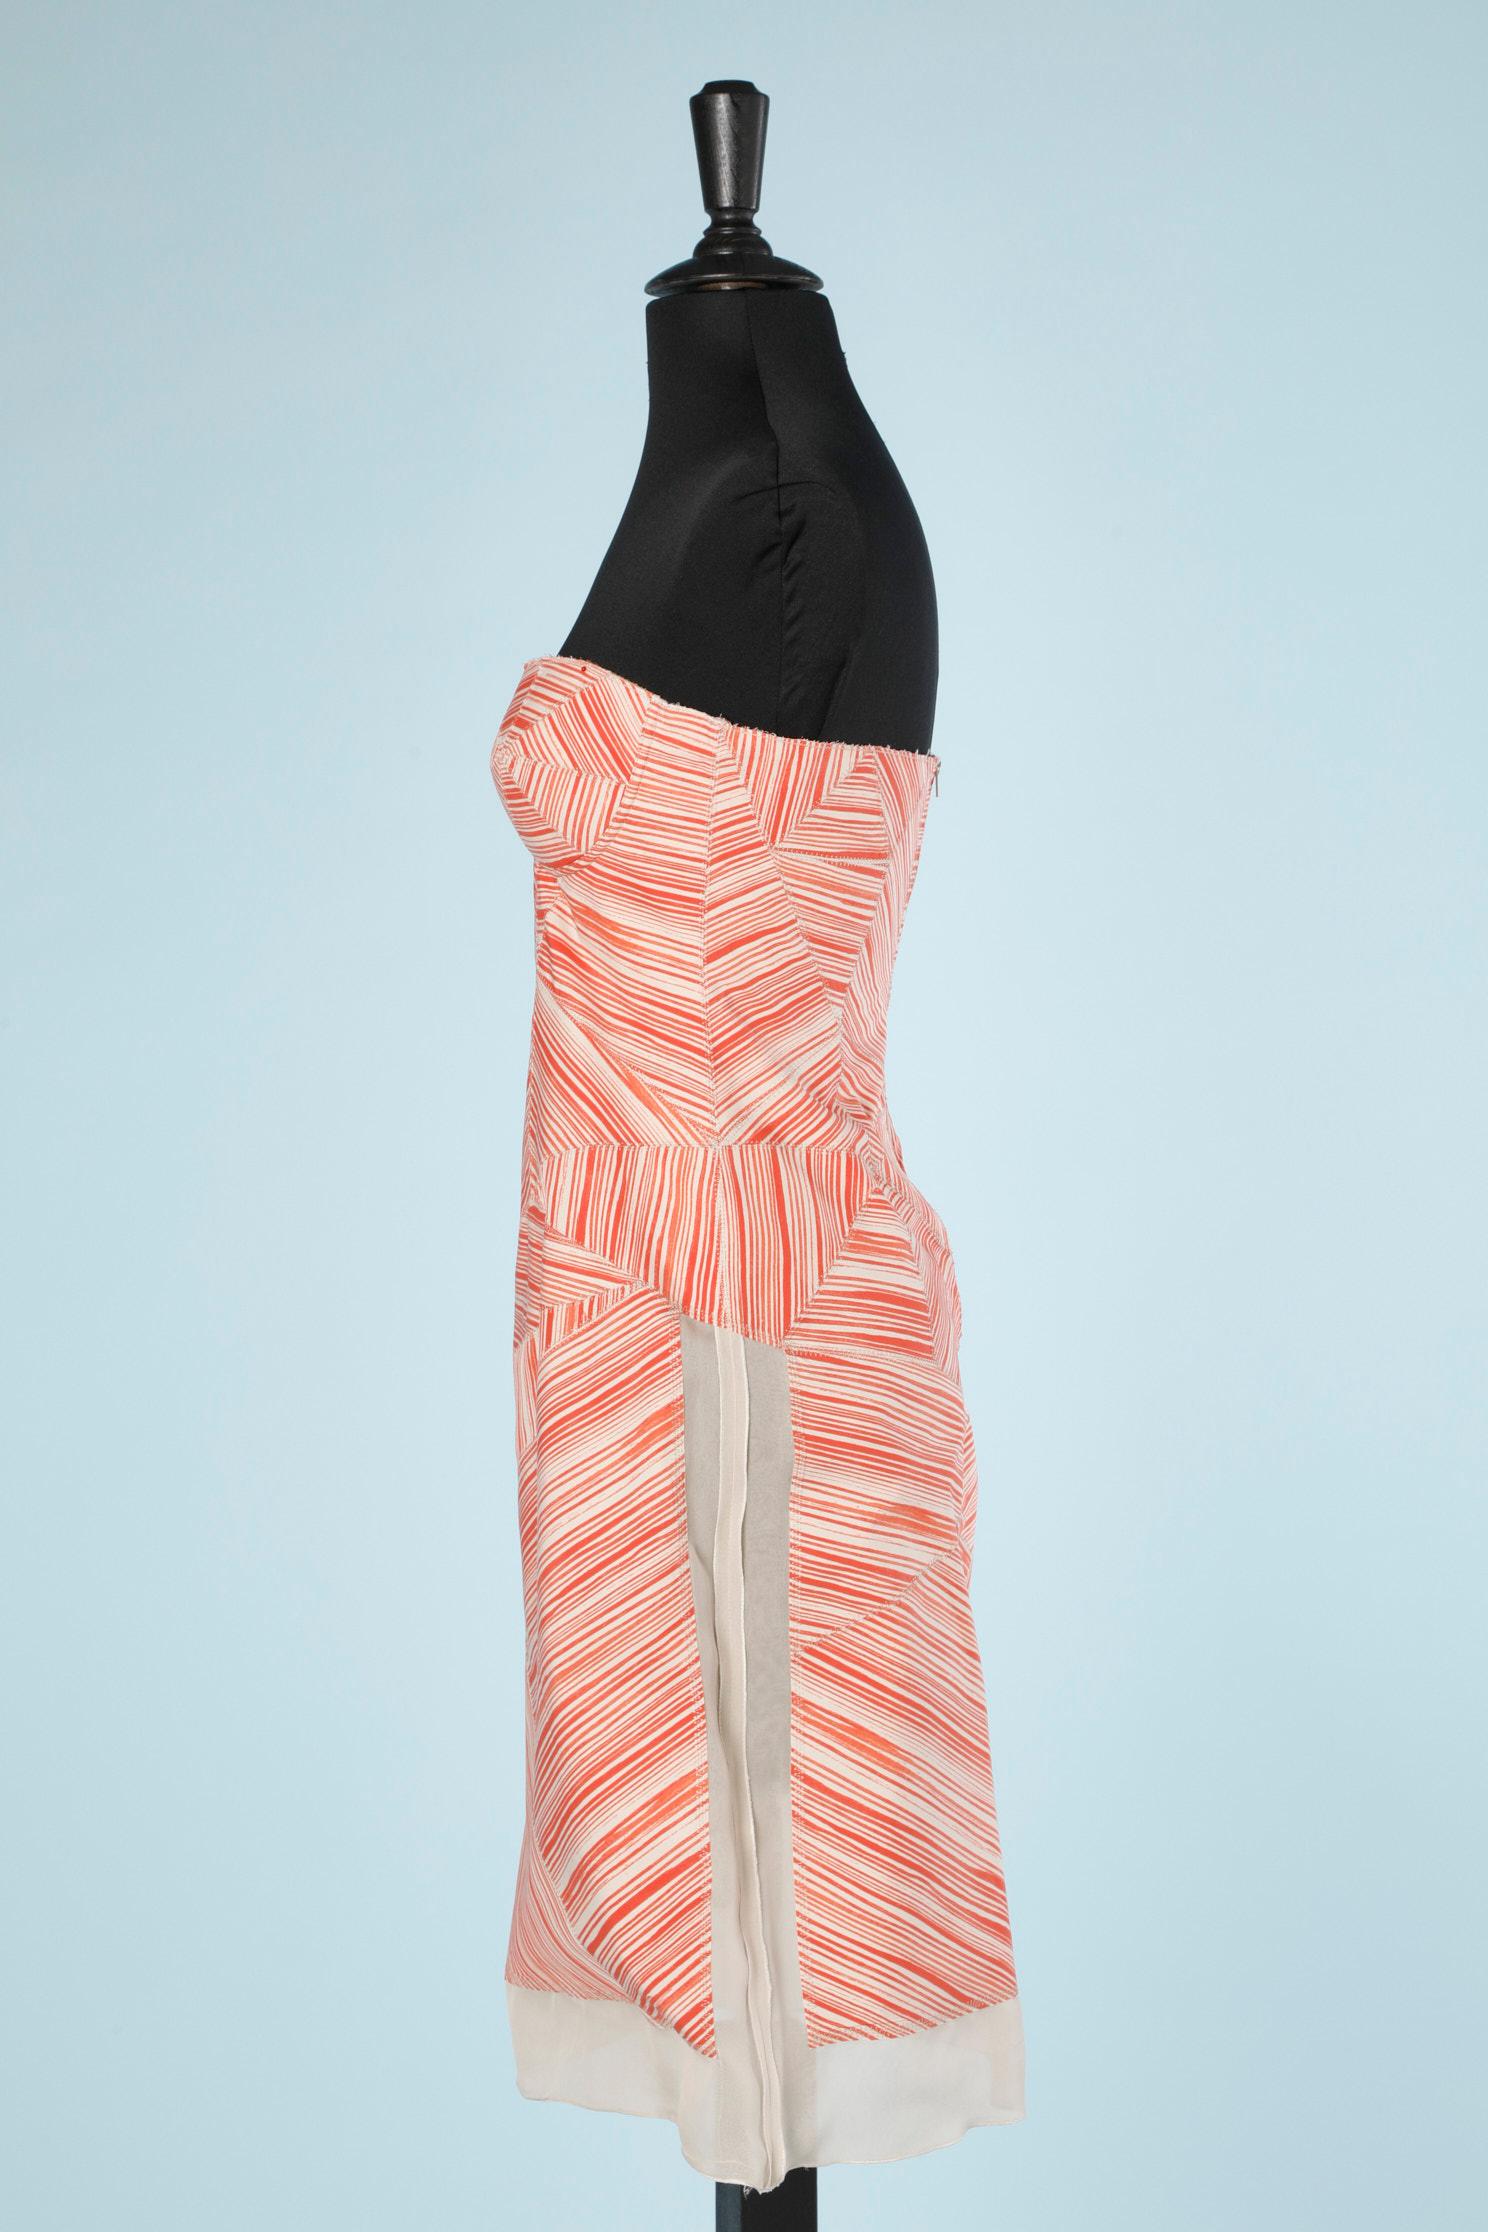 Beige Busier dress strapless  with graphic pattern  Bottega Veneta  For Sale